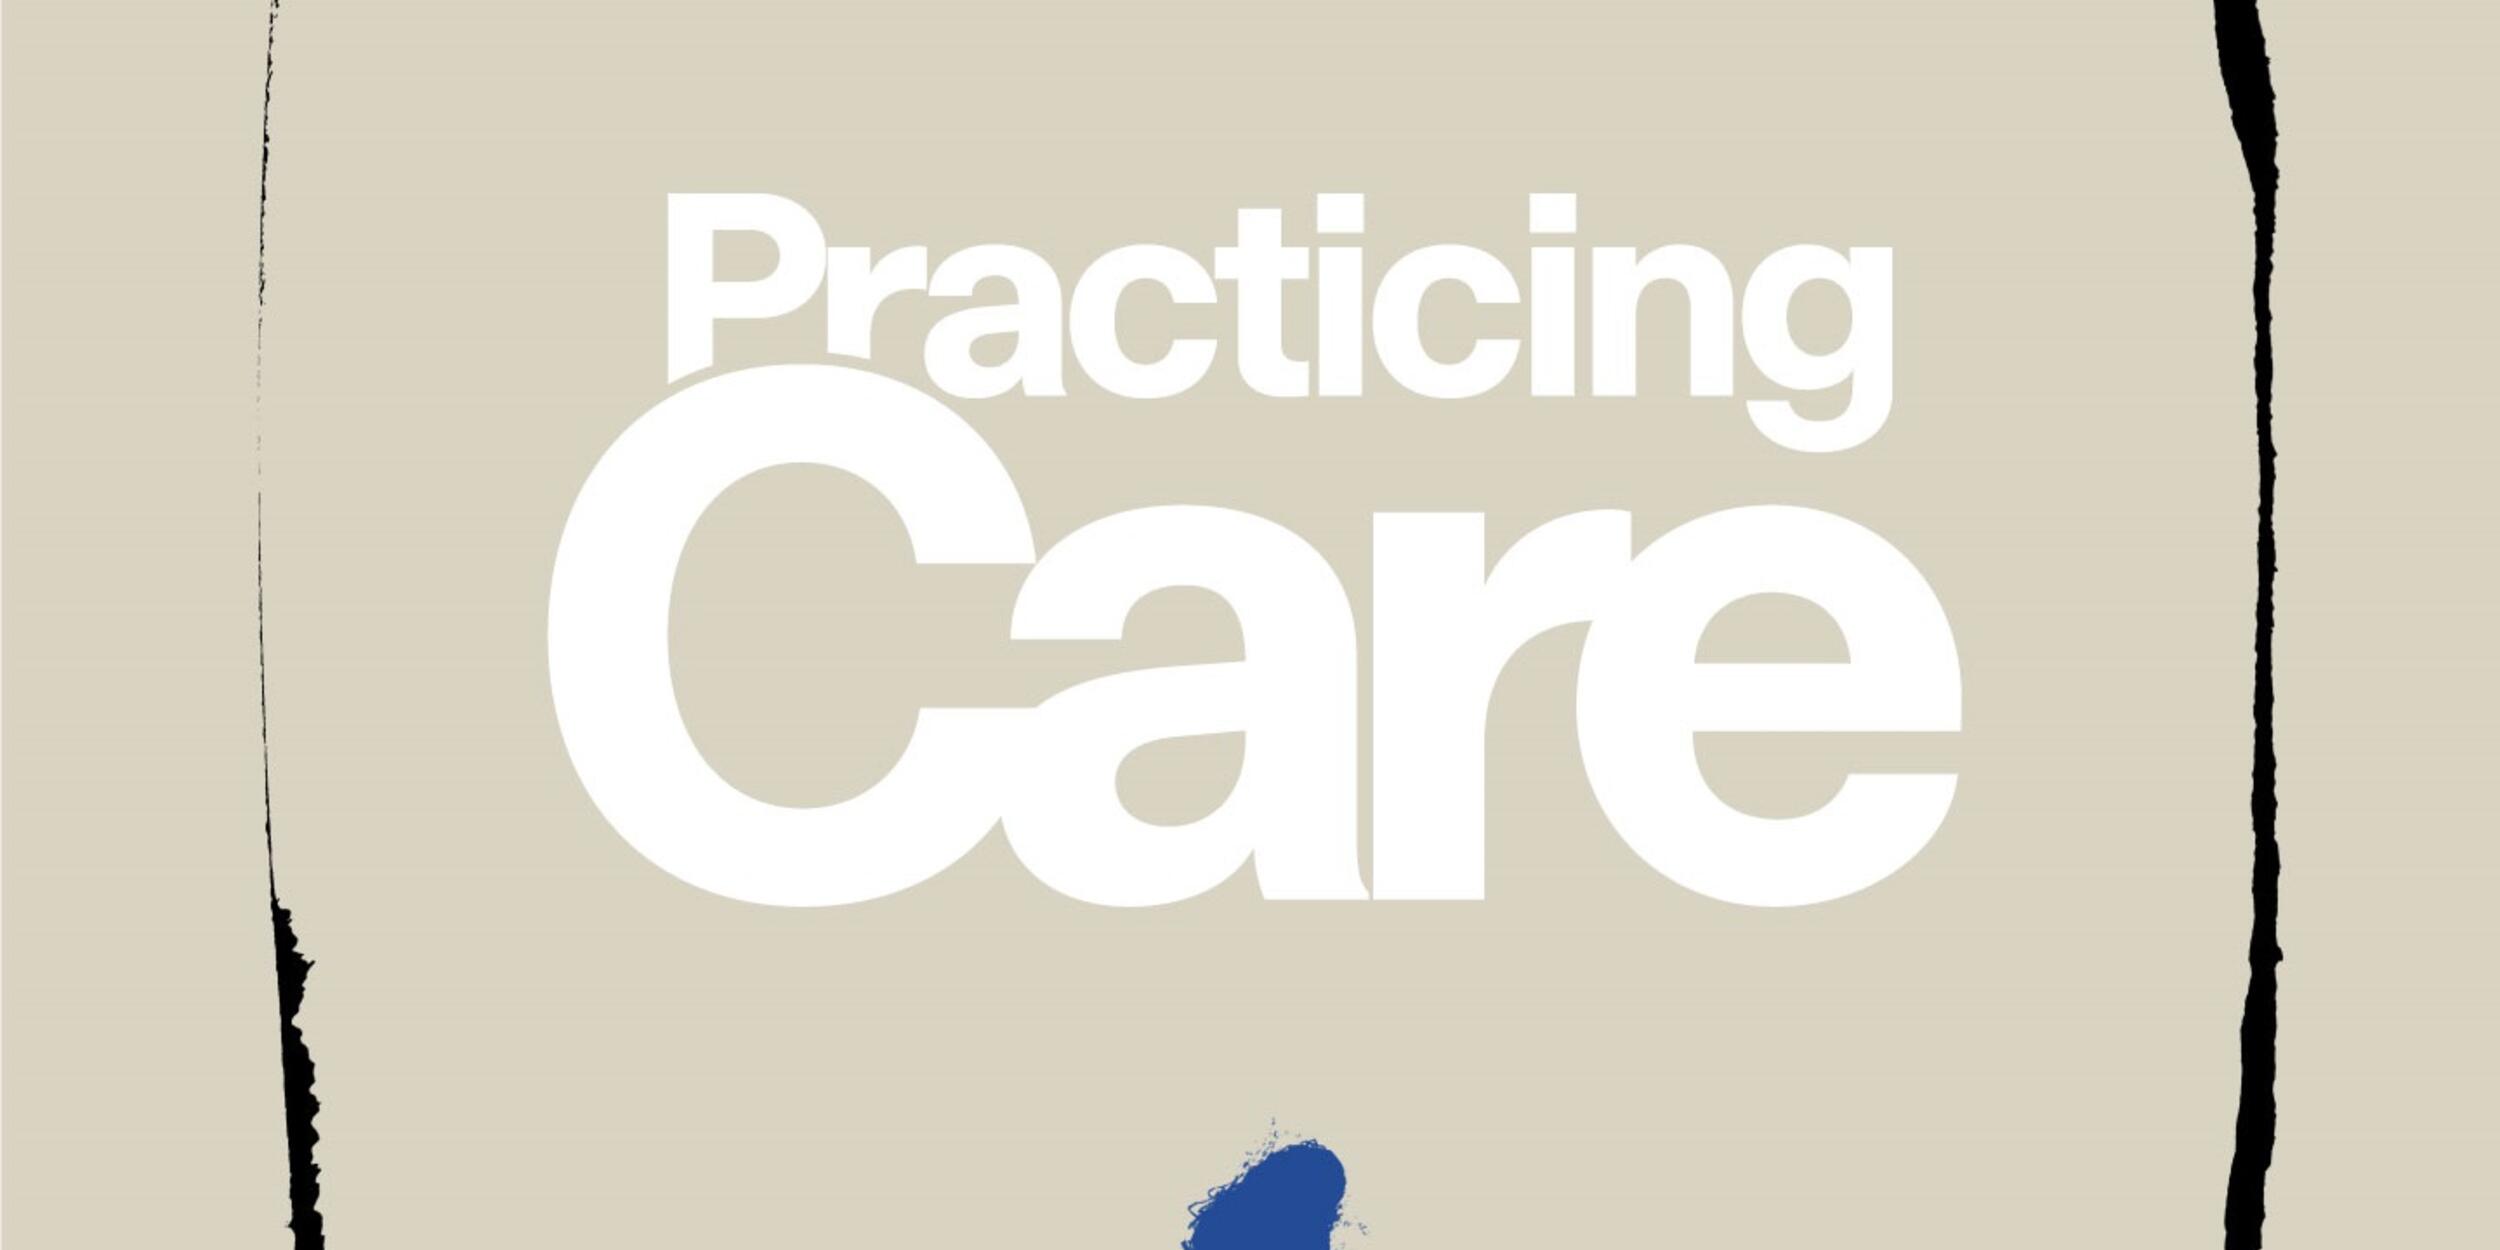 Practicing Care | © Matthieu Rynkiewicz 